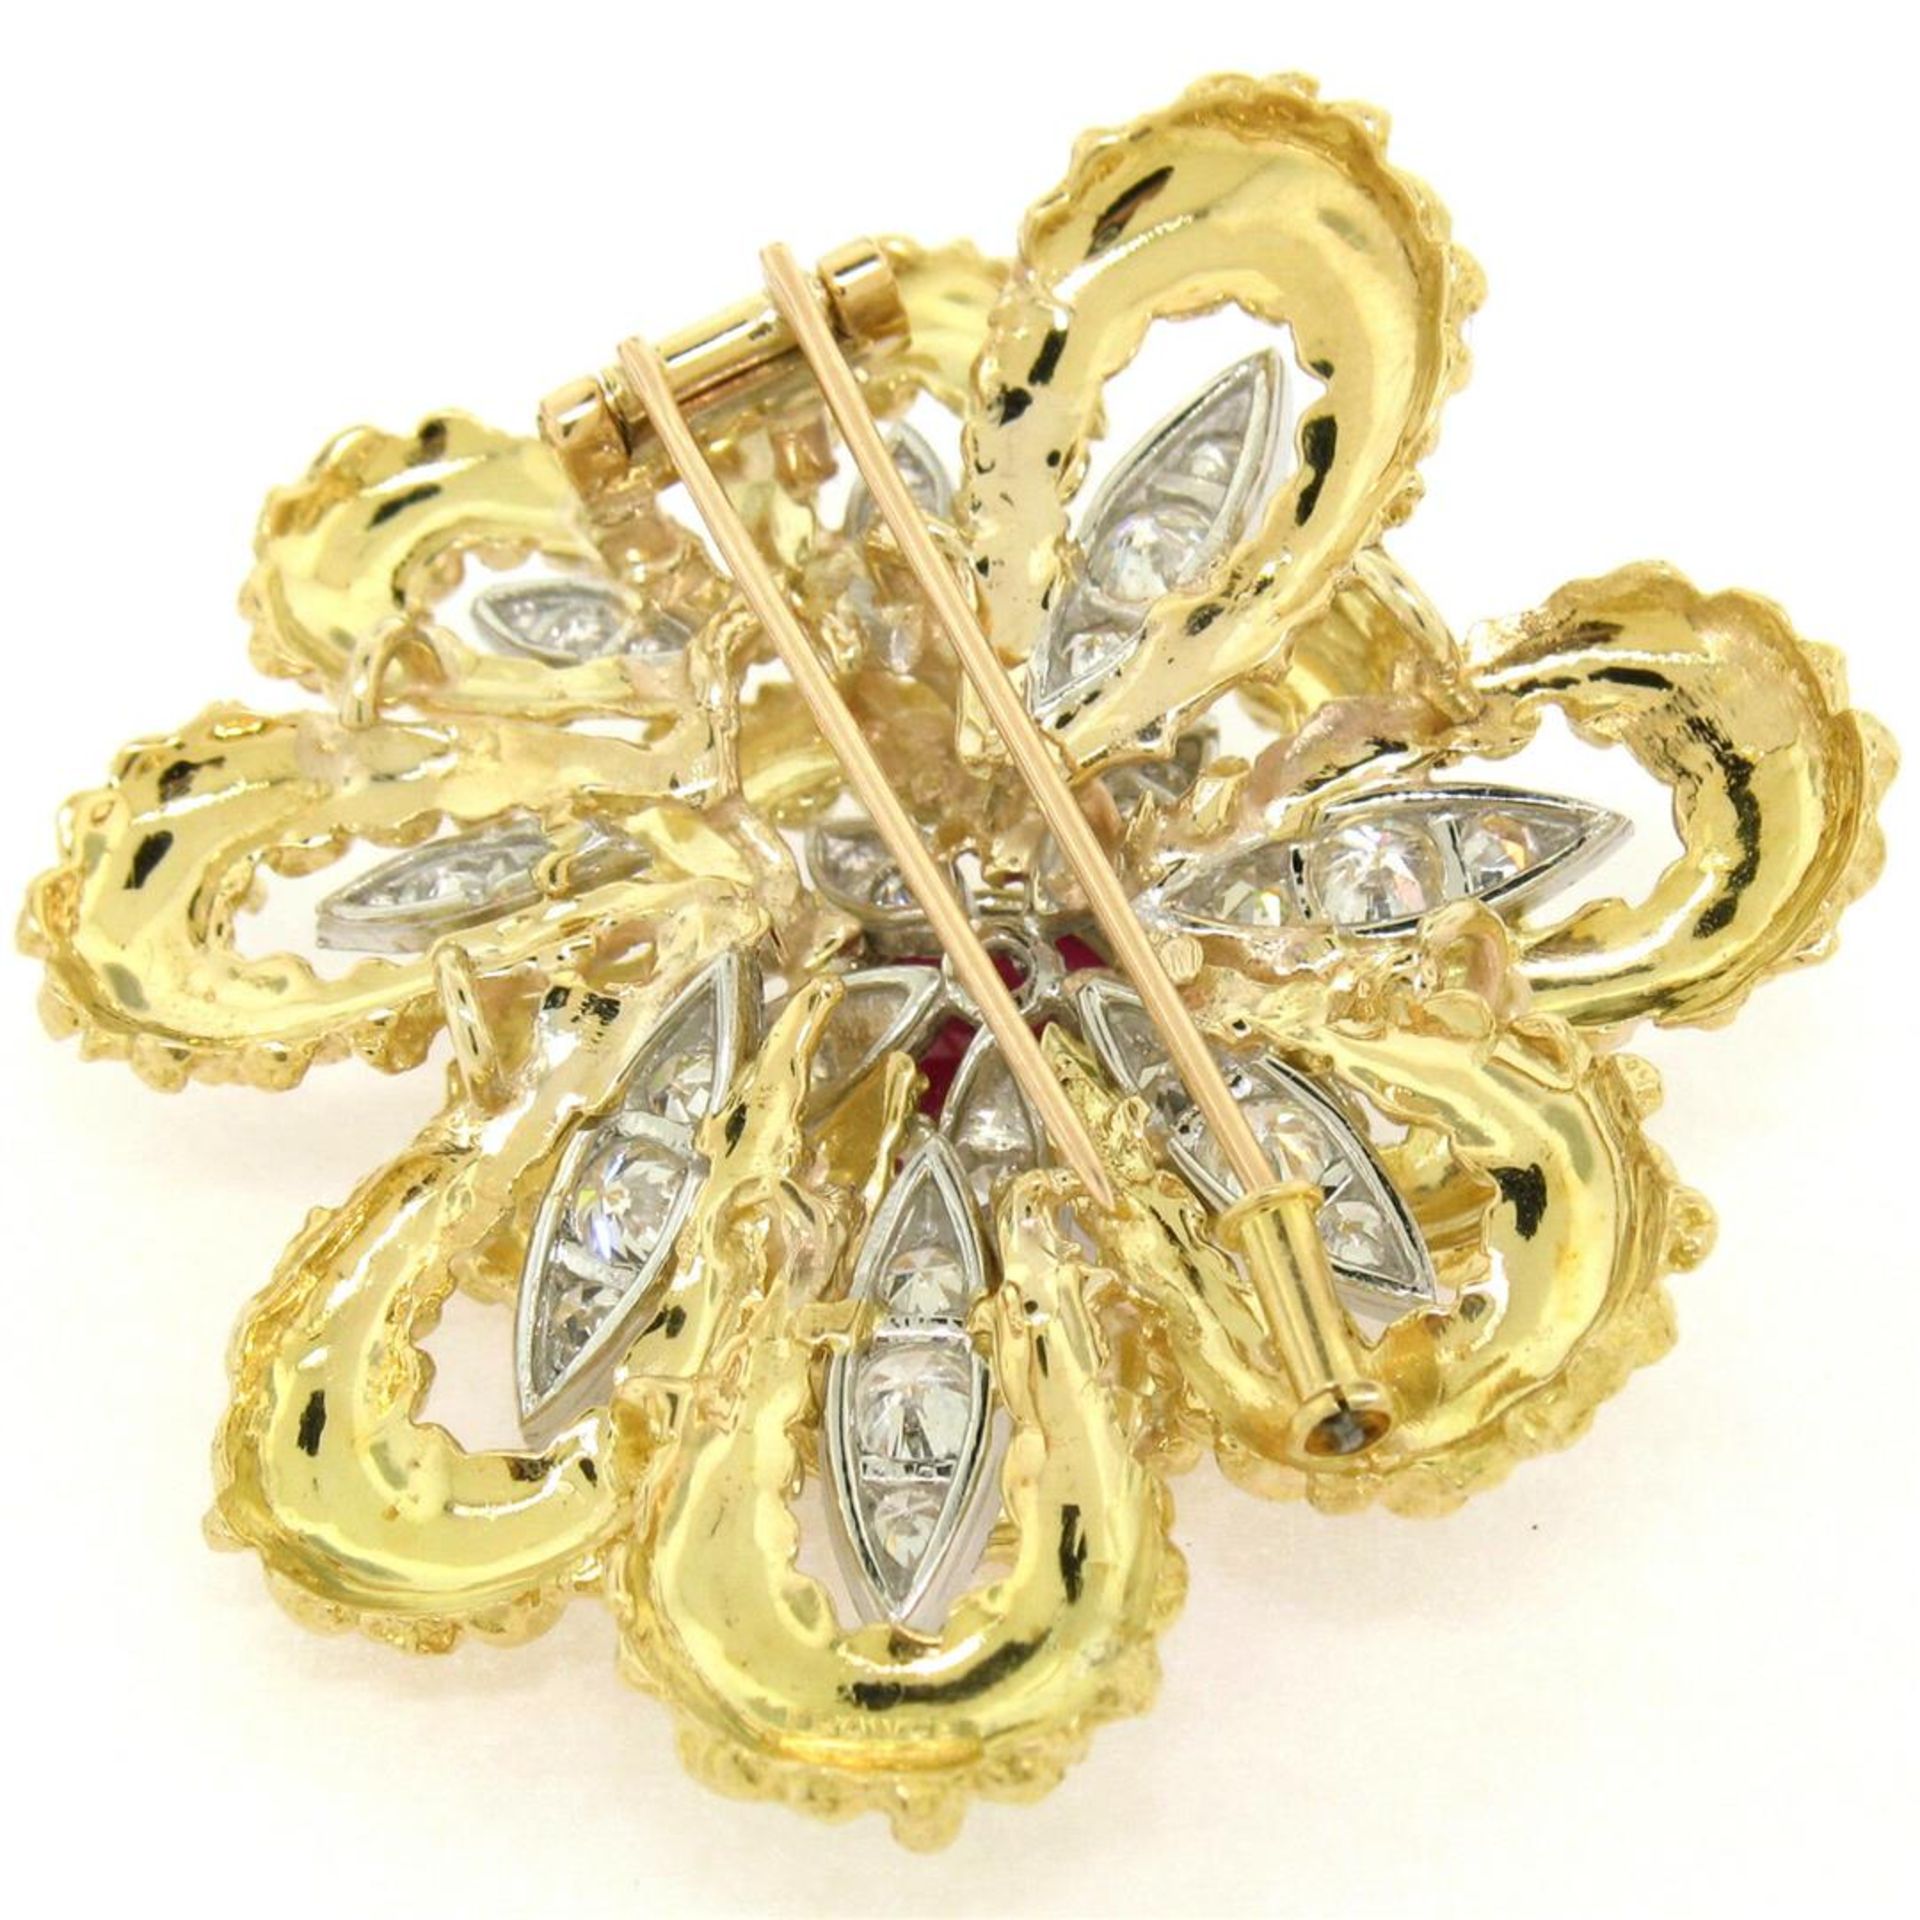 Vintage French 18K TT Gold 4.27ctw Diamonds & Ruby Textured Flower Burst Brooch - Image 4 of 6